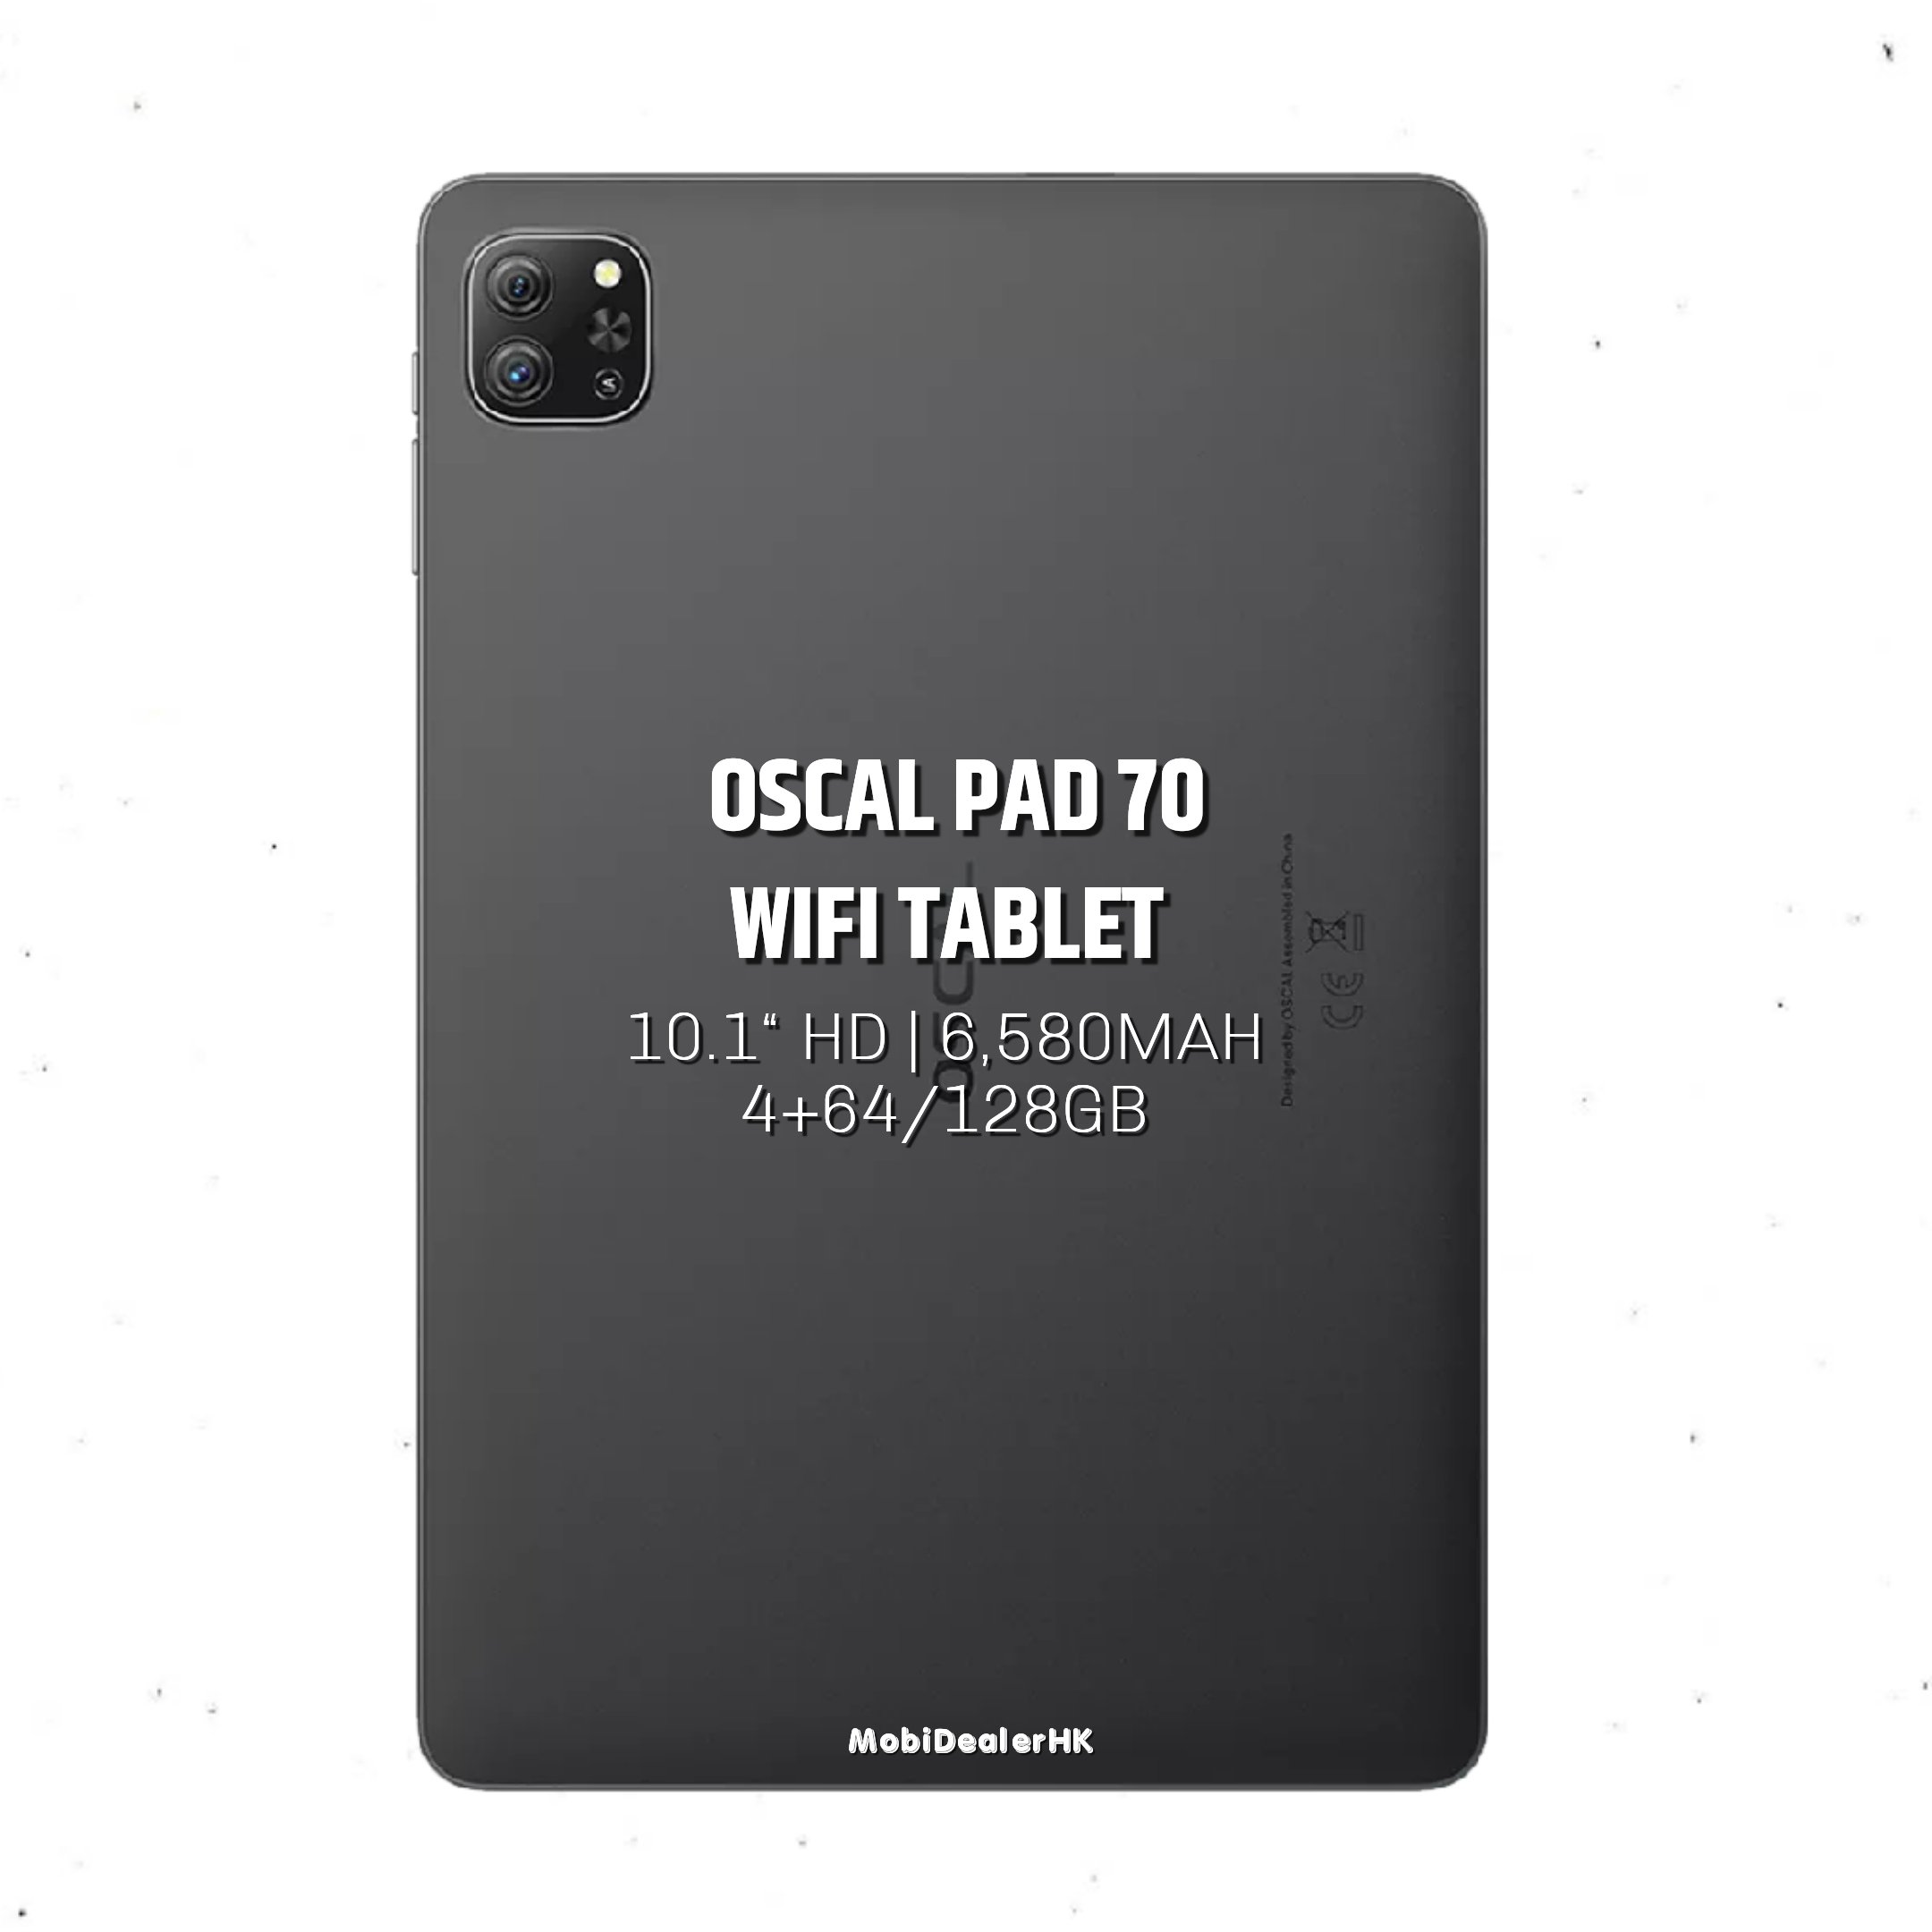 Oscal Pad 70 WiFi 平板電腦| MobiDealerHK